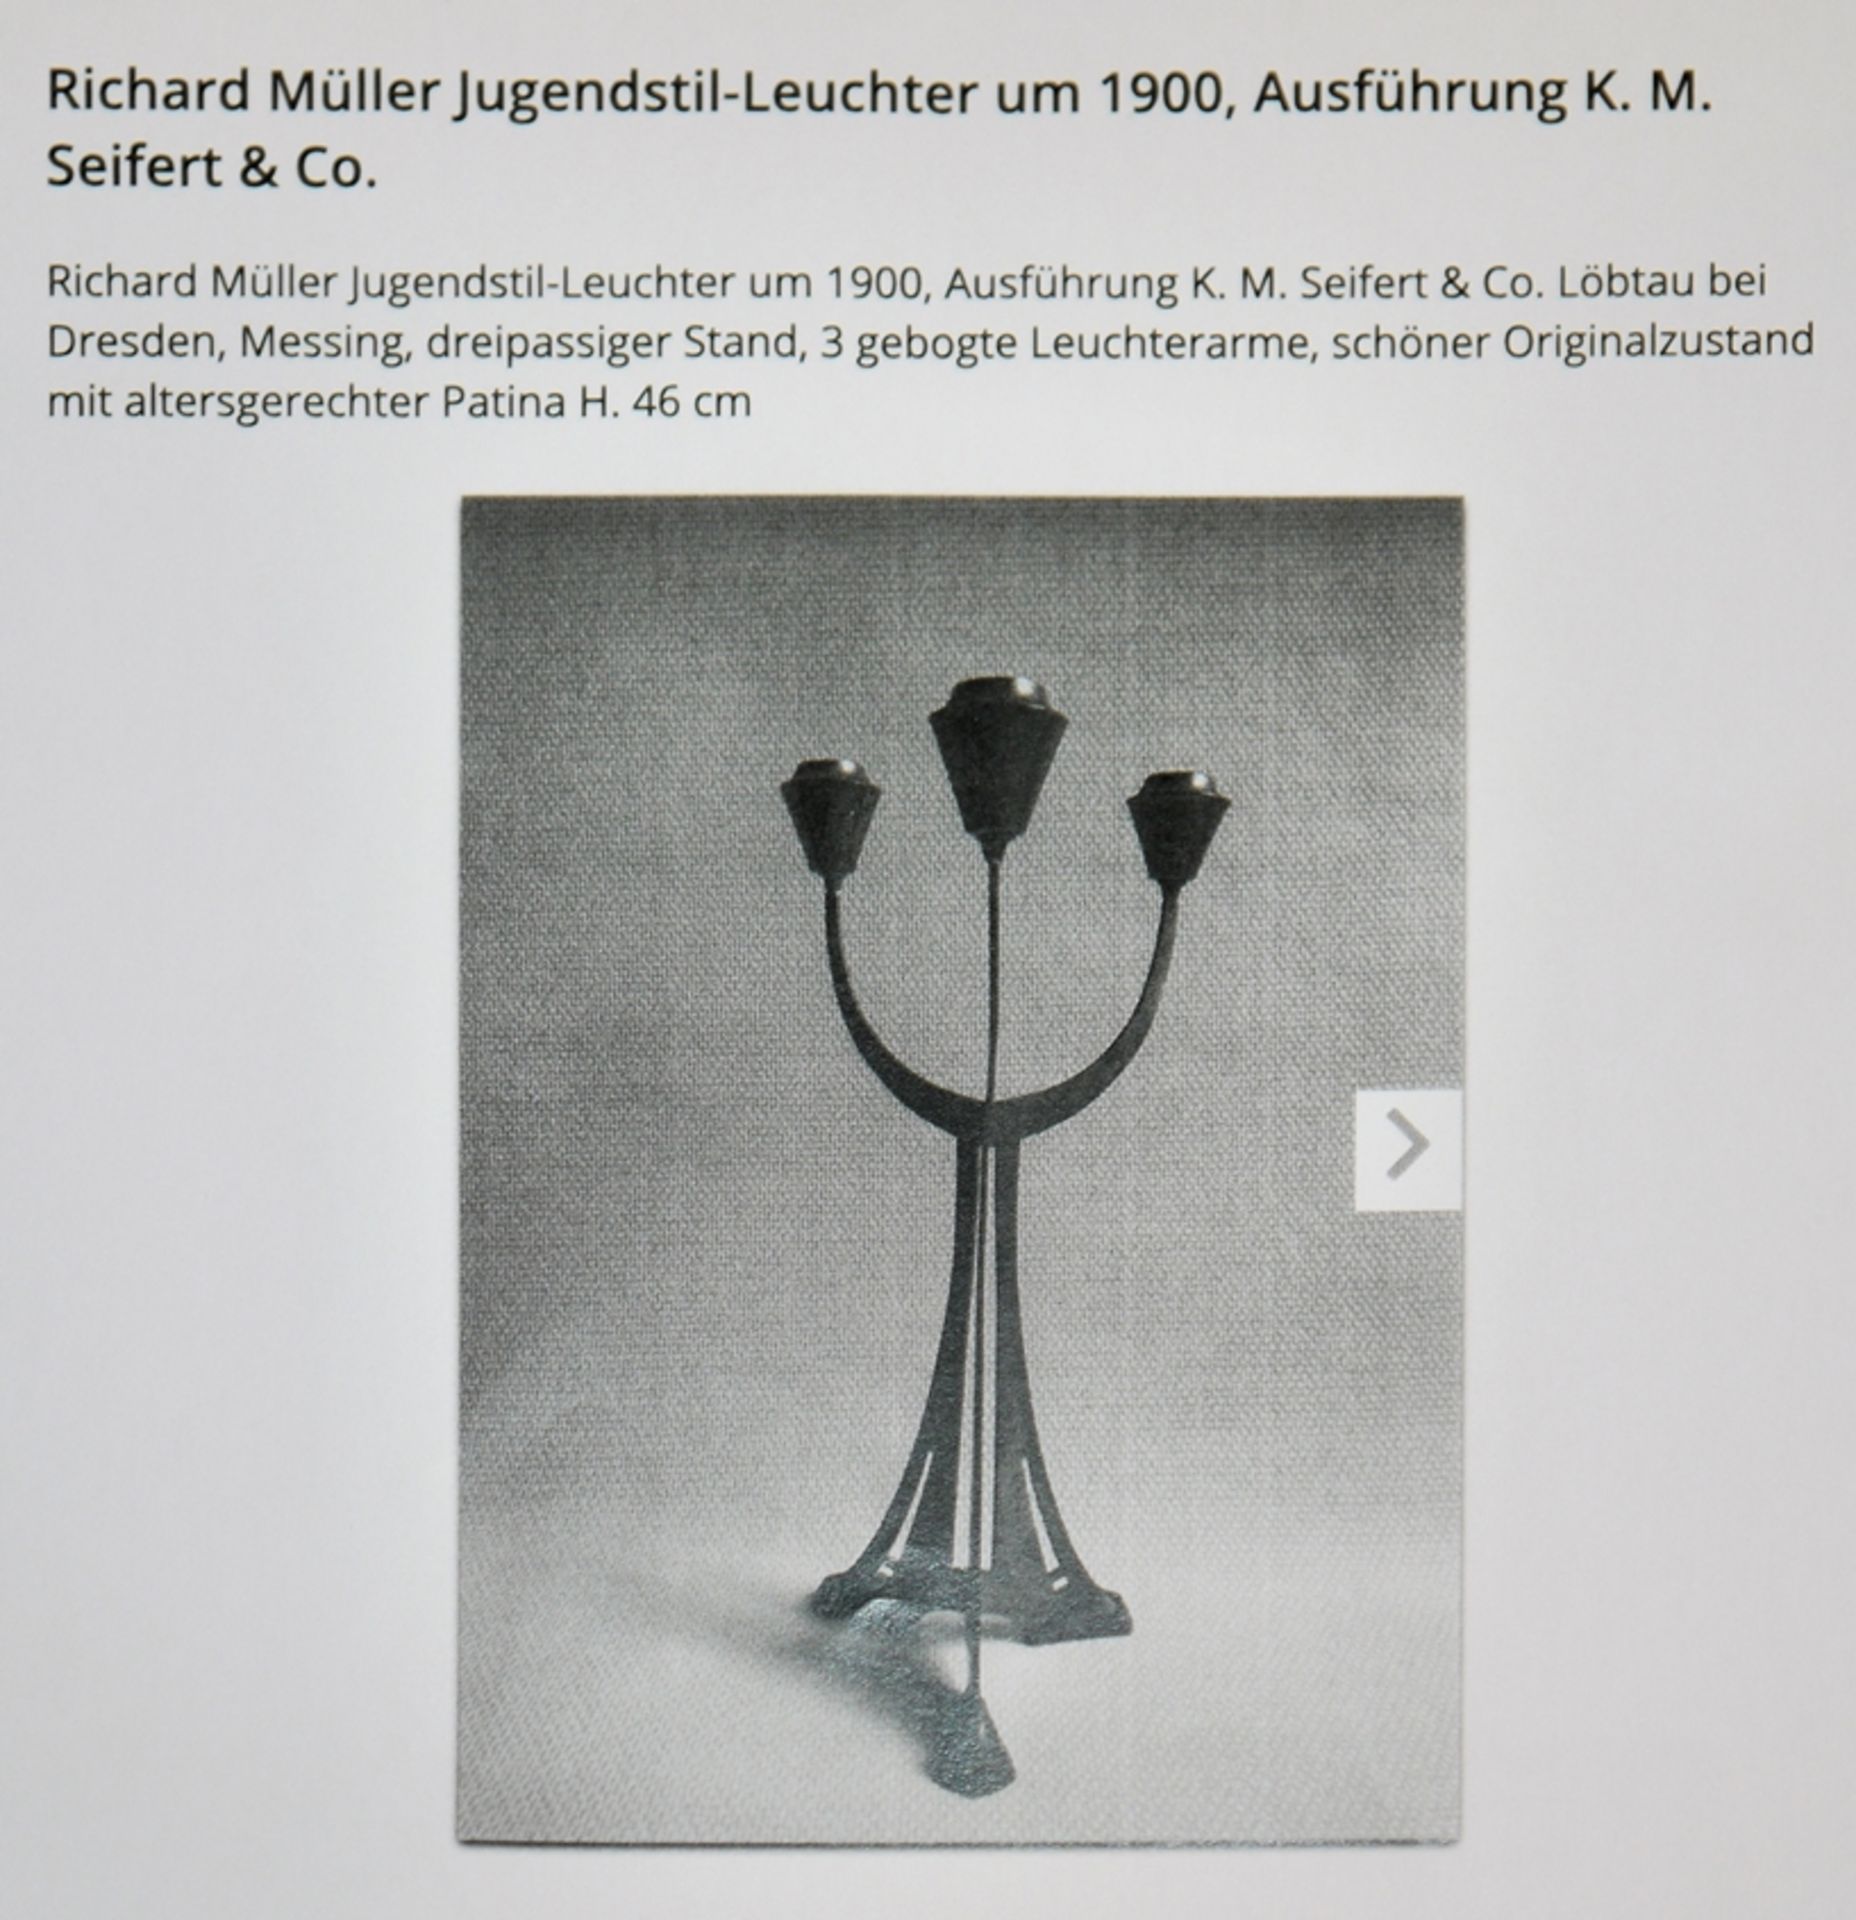 Pair of large Art Nouveau candlesticks, brass bronze, designed by Richard Müller - Image 2 of 2